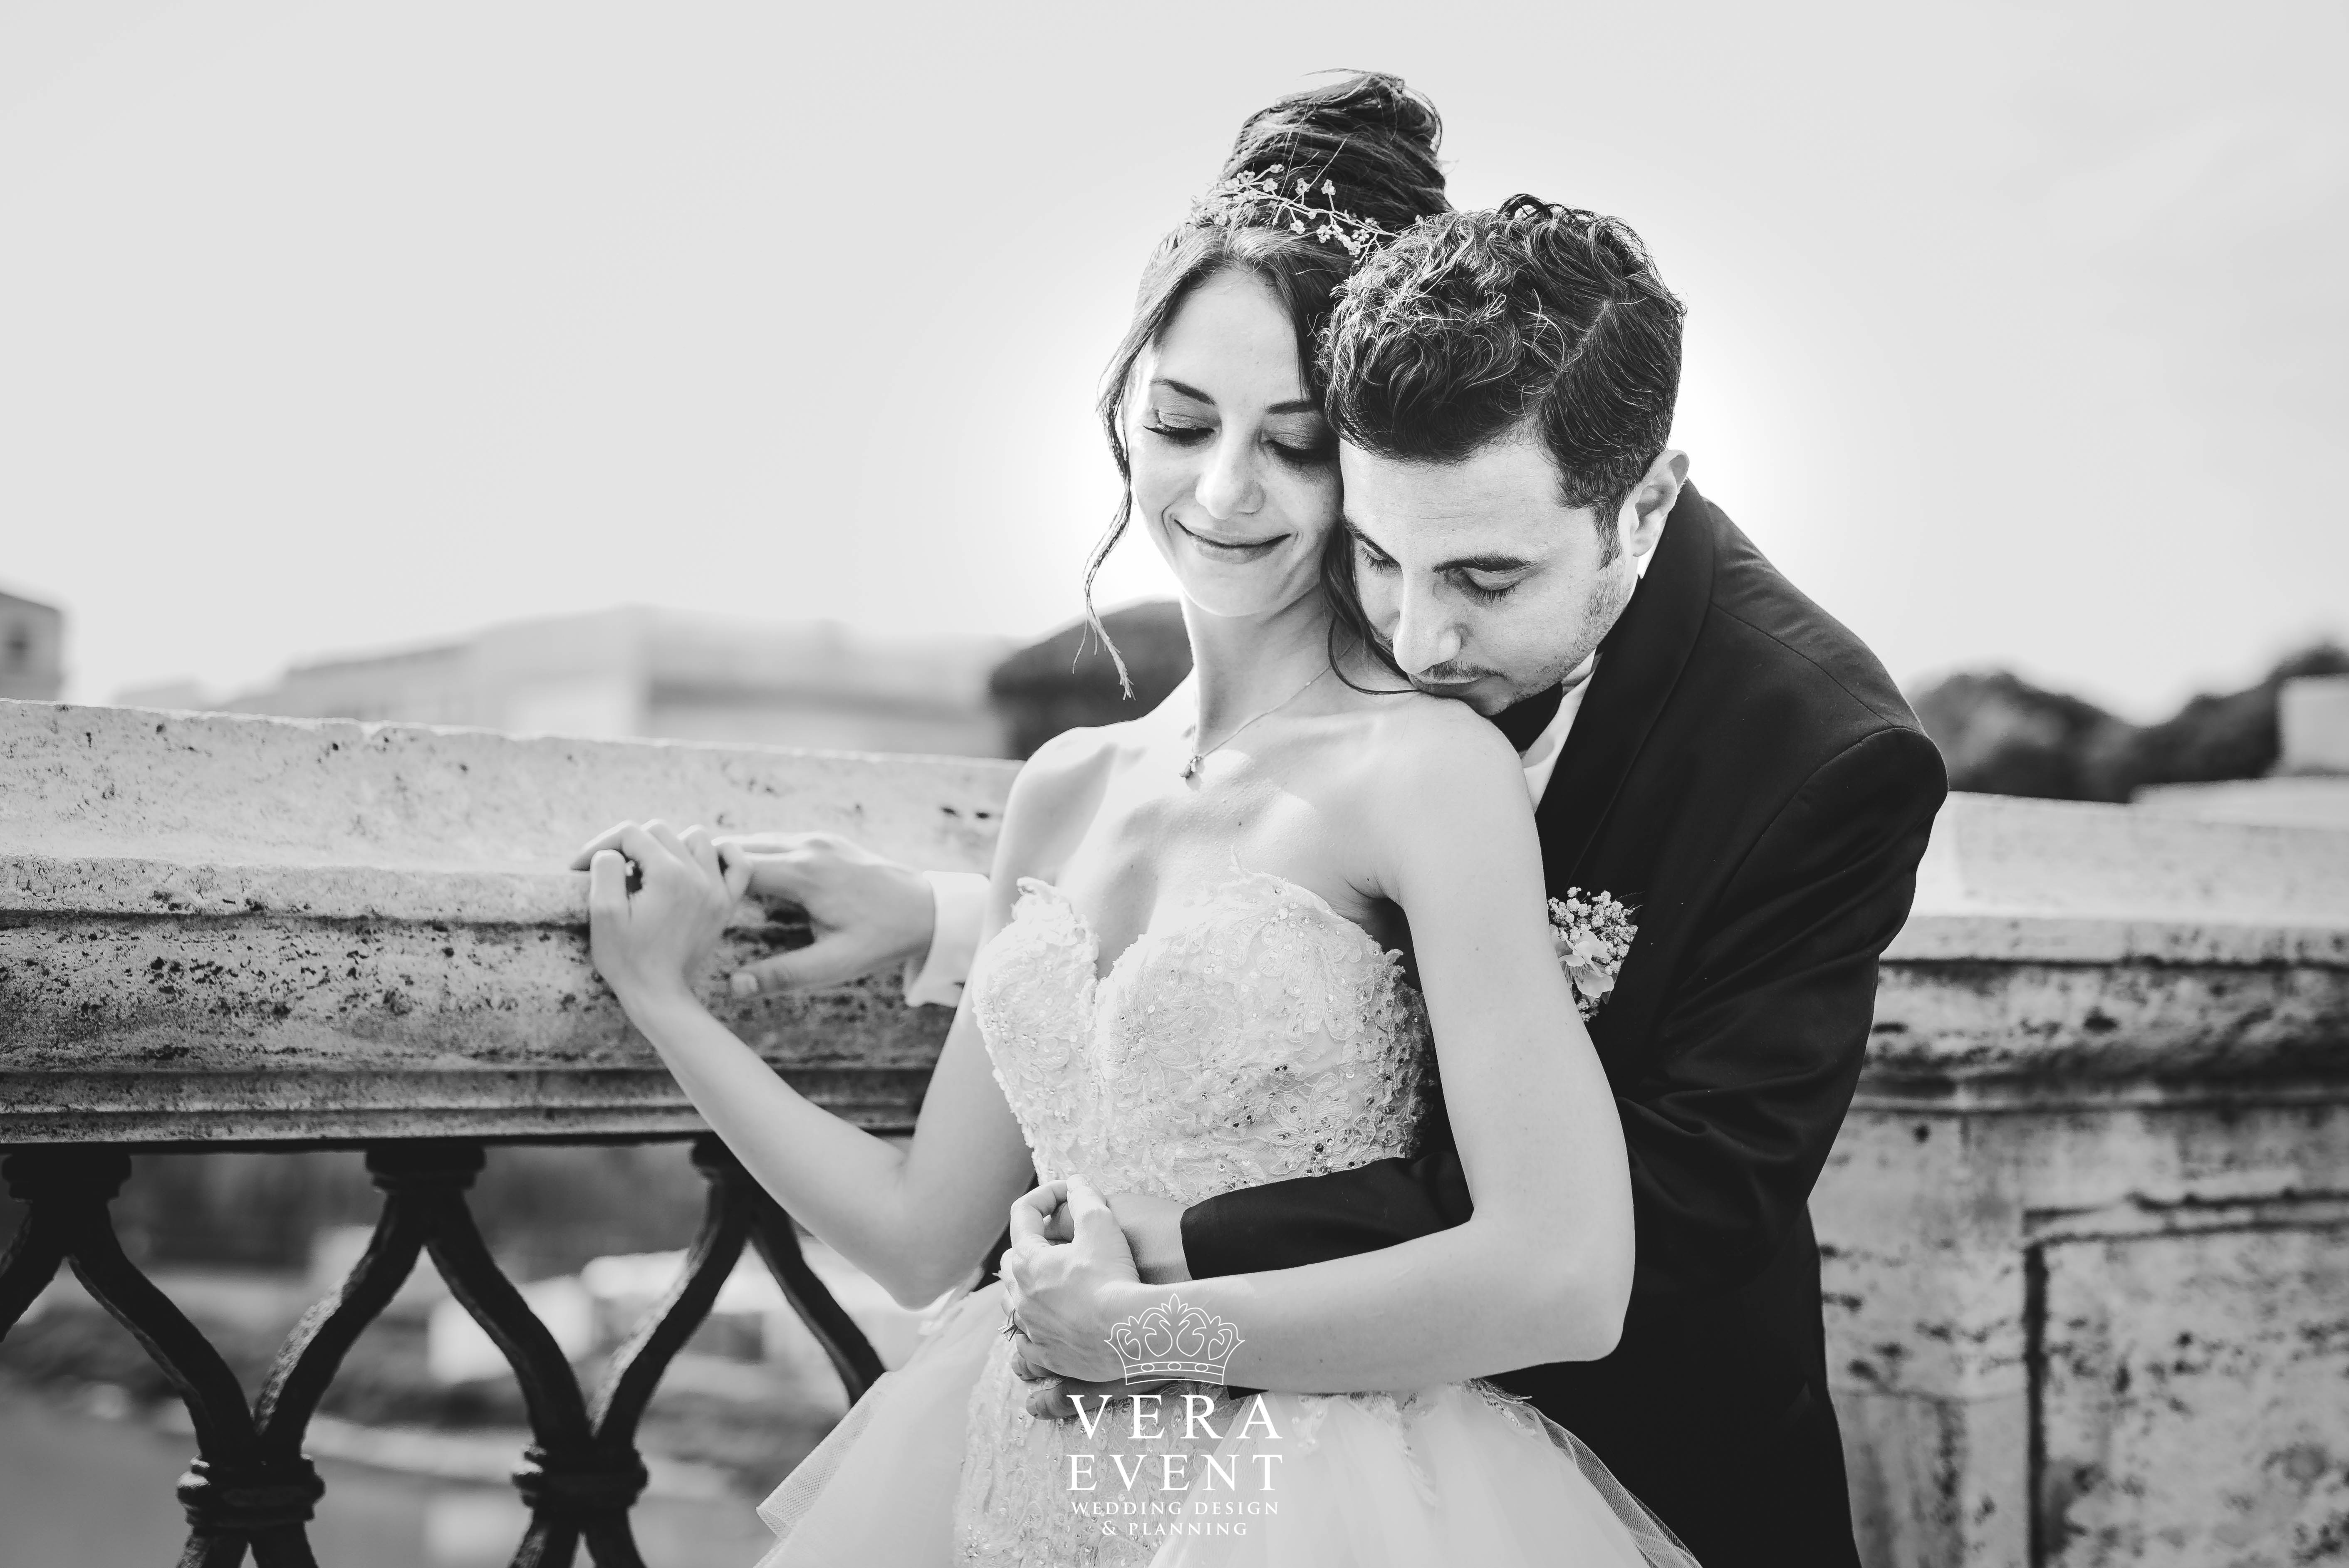 Fulya & Doruk #weddingsinitaly